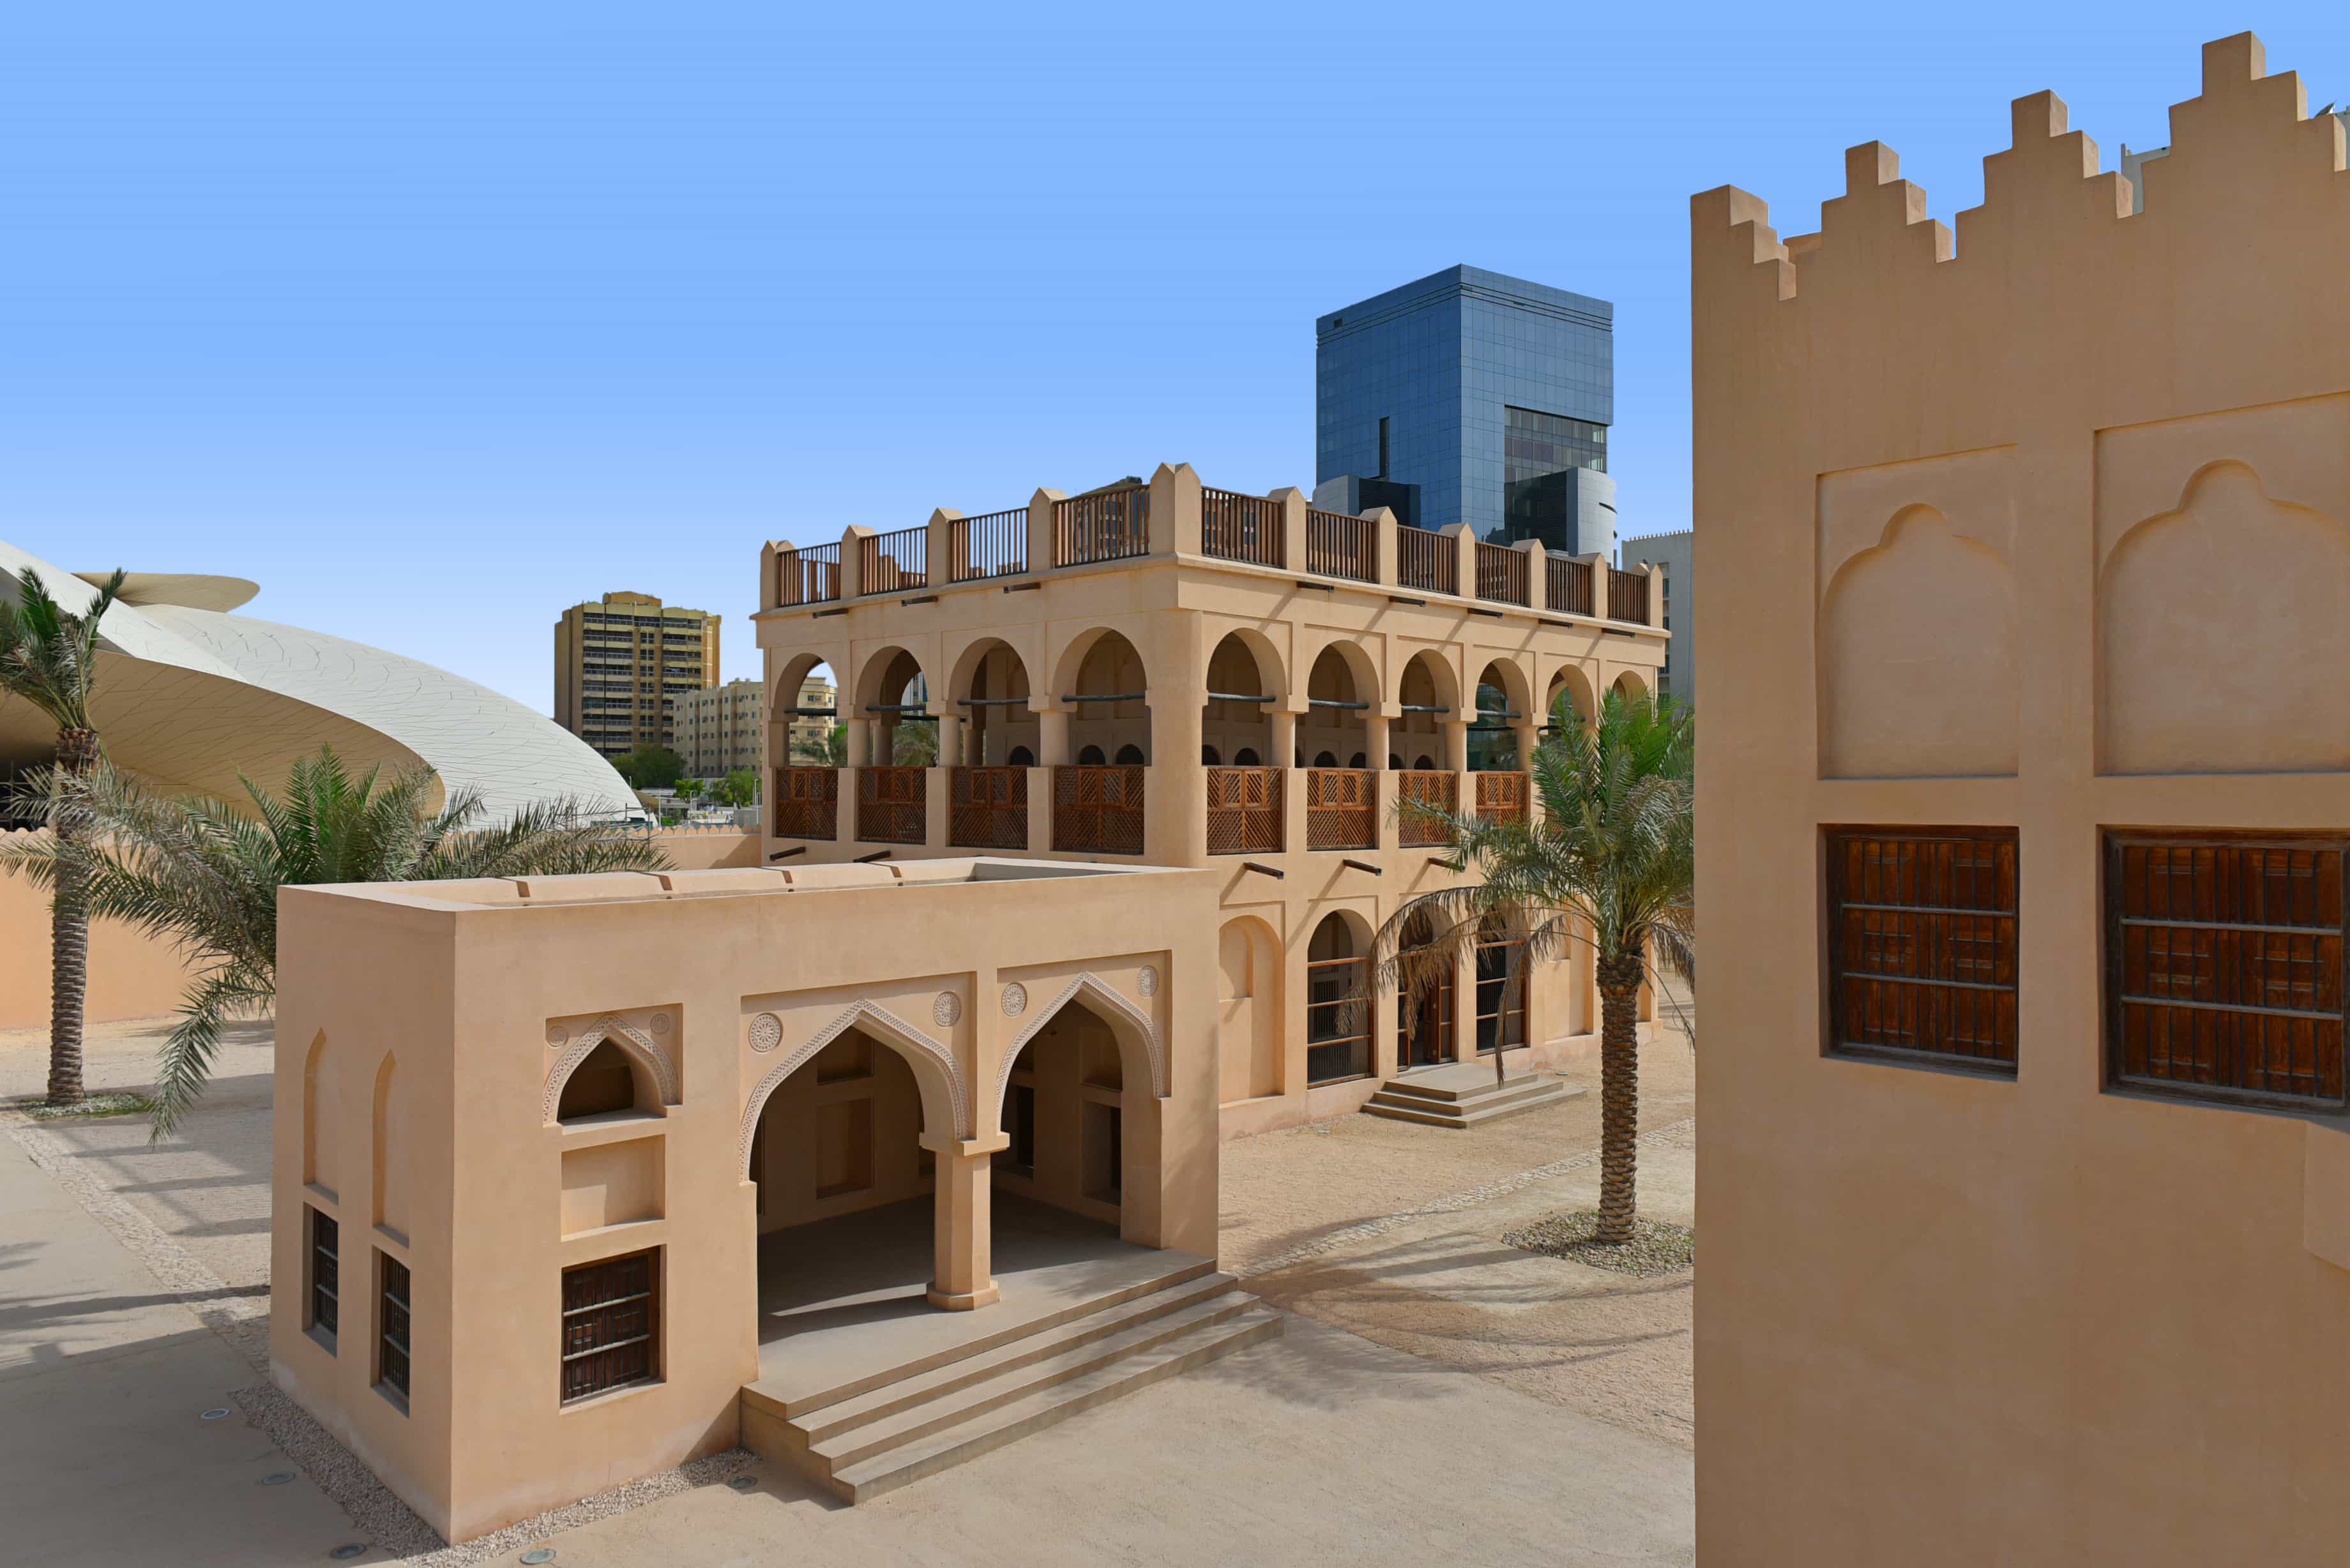 Historic Palace of Sheikh Abdullah bin Jassim Al Thani